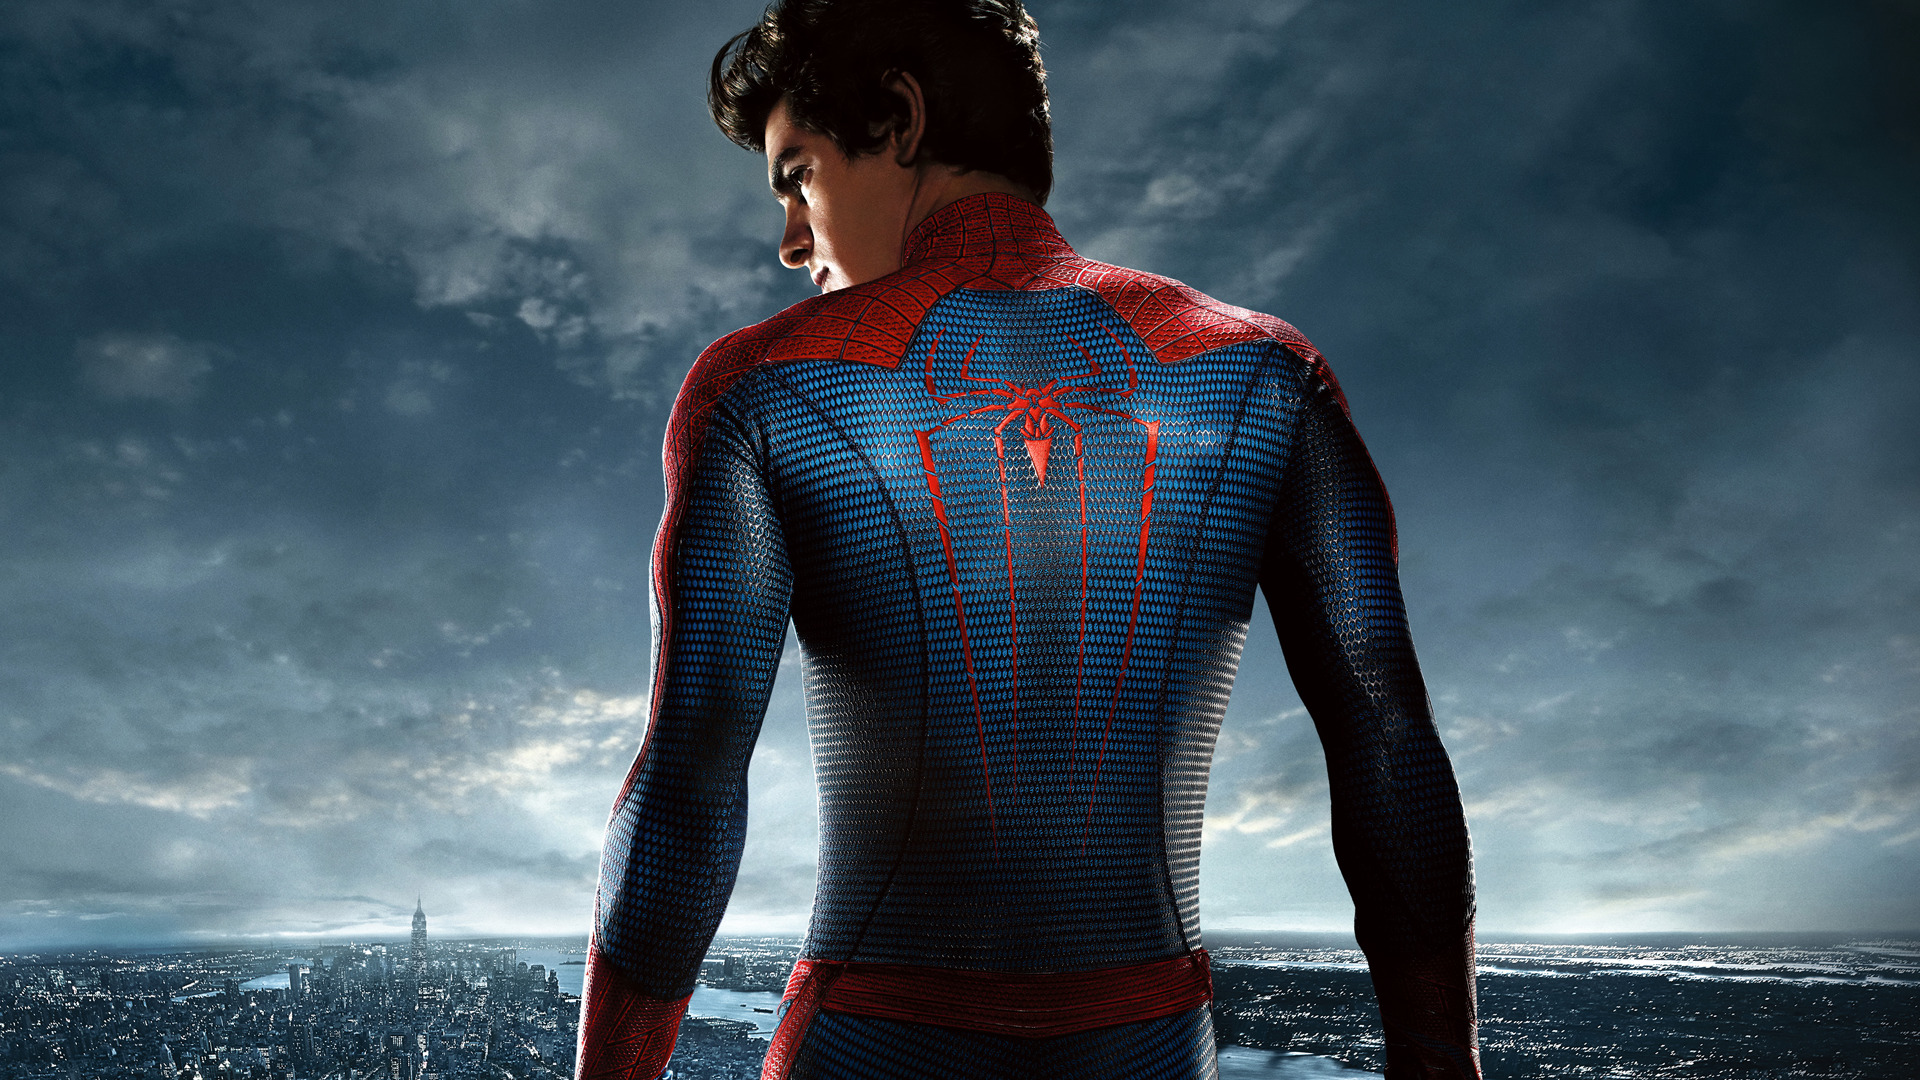 HD The Amazing Spiderman Movie Wallpaper HD 1080p - HiReWallpapers ...